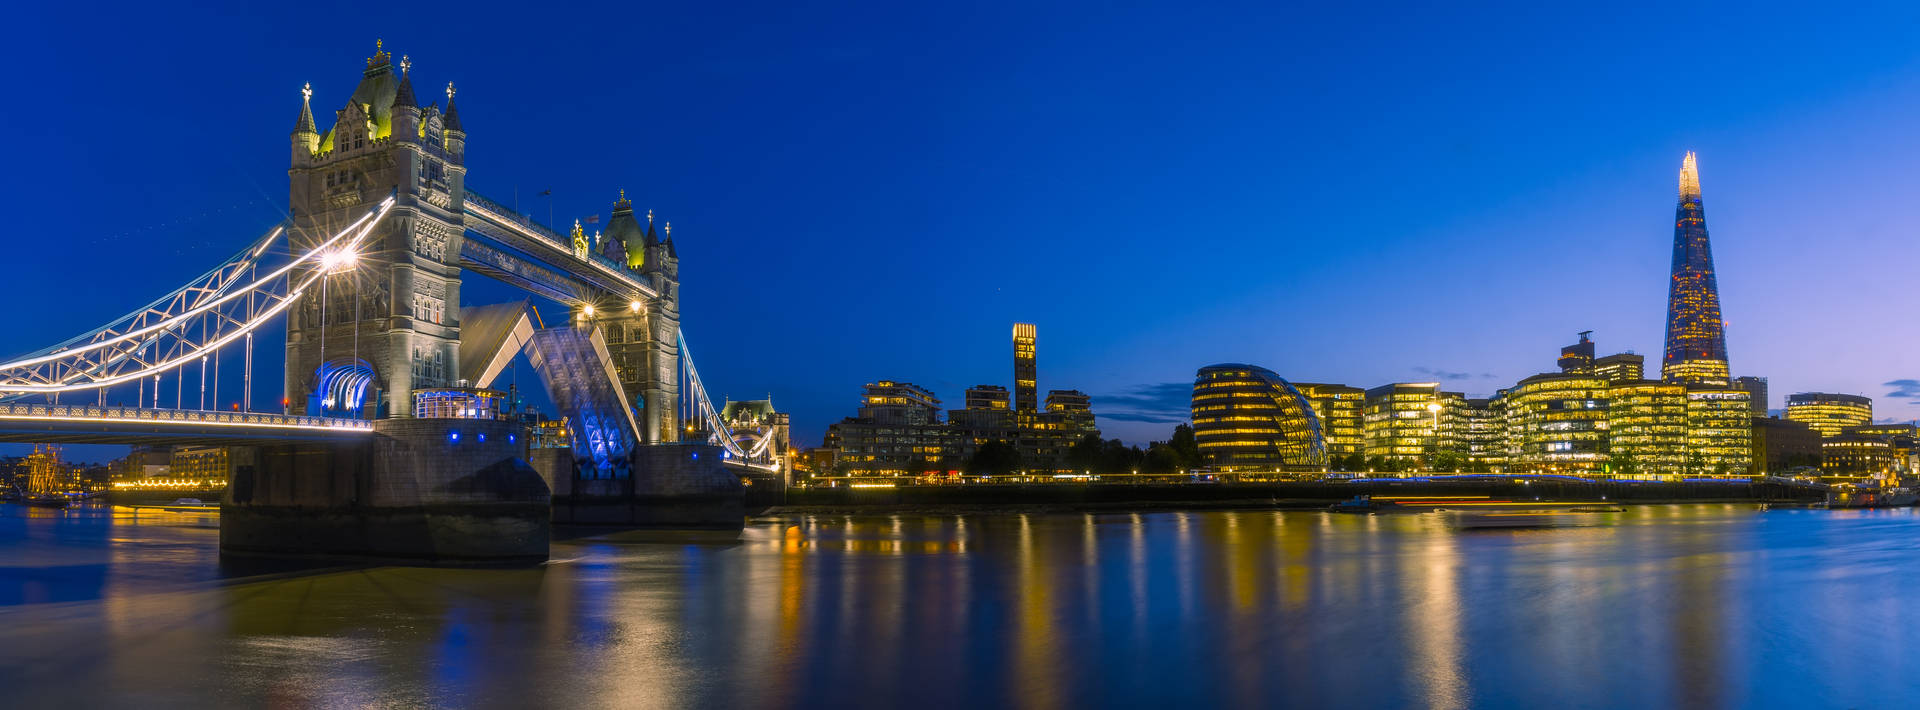 Tower Bridge And Buildings At Night